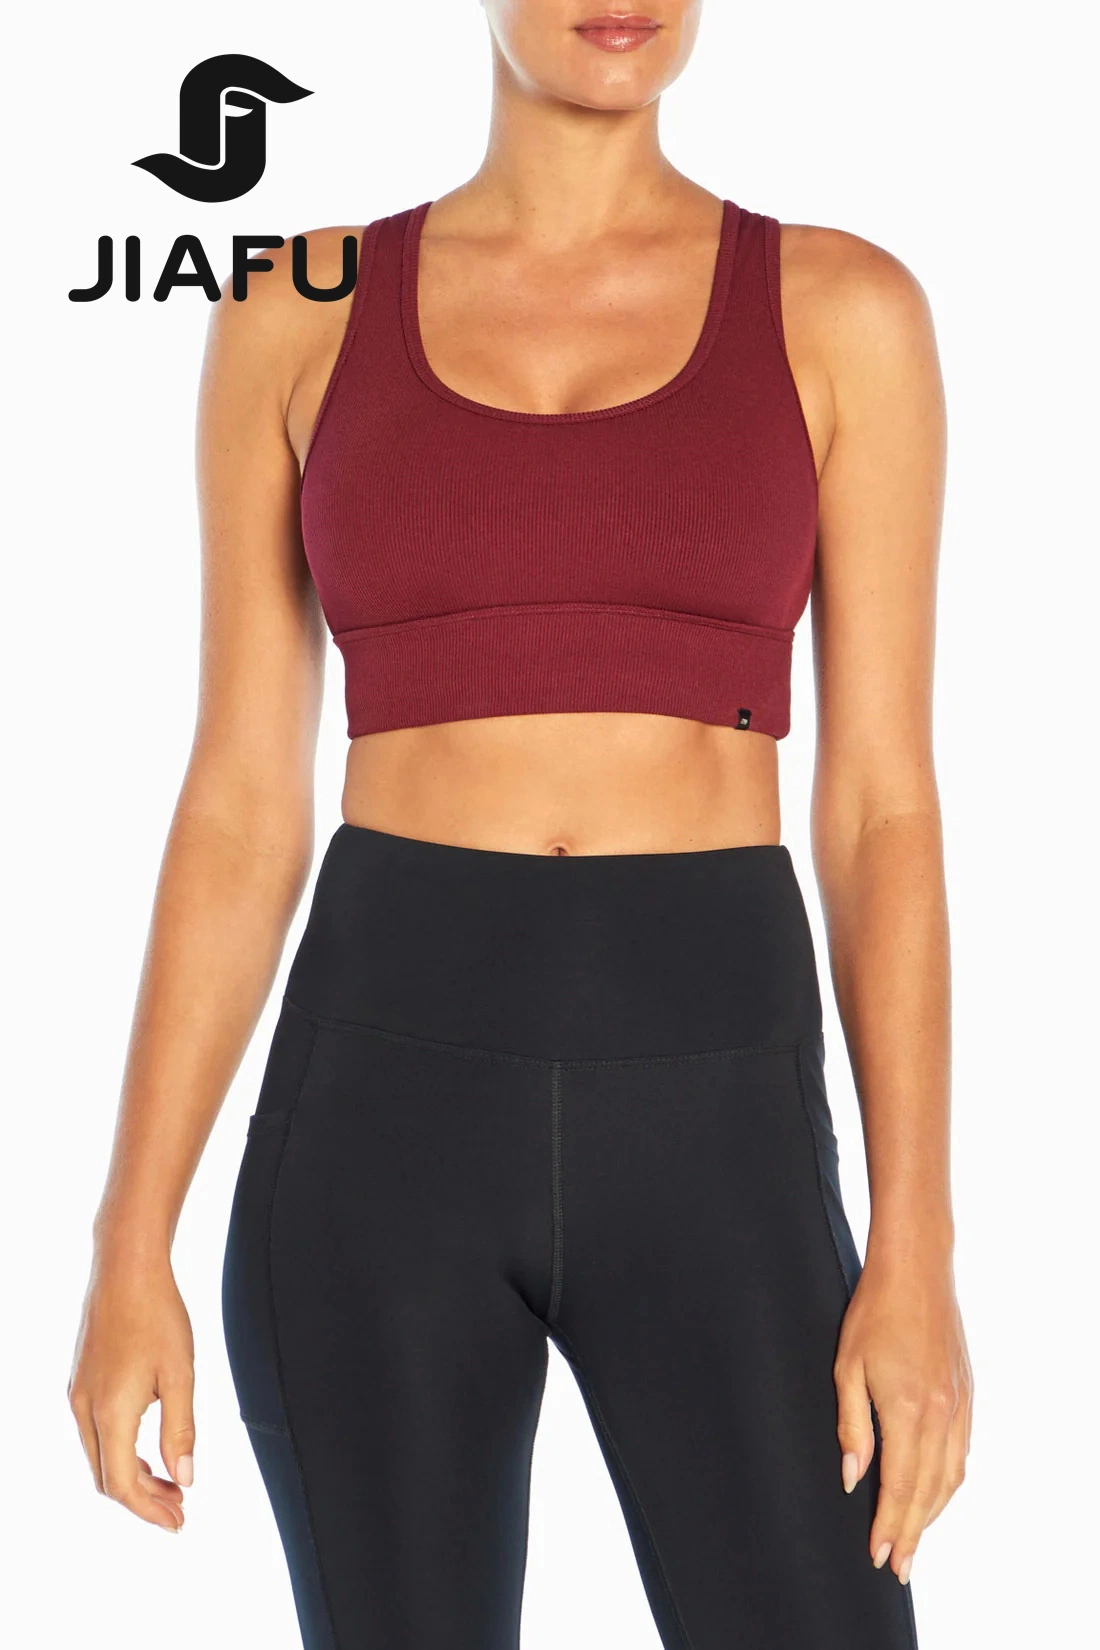 Customized Logo Sports Wear Women Quick Dry Breathable Yoga Top Gym Bra